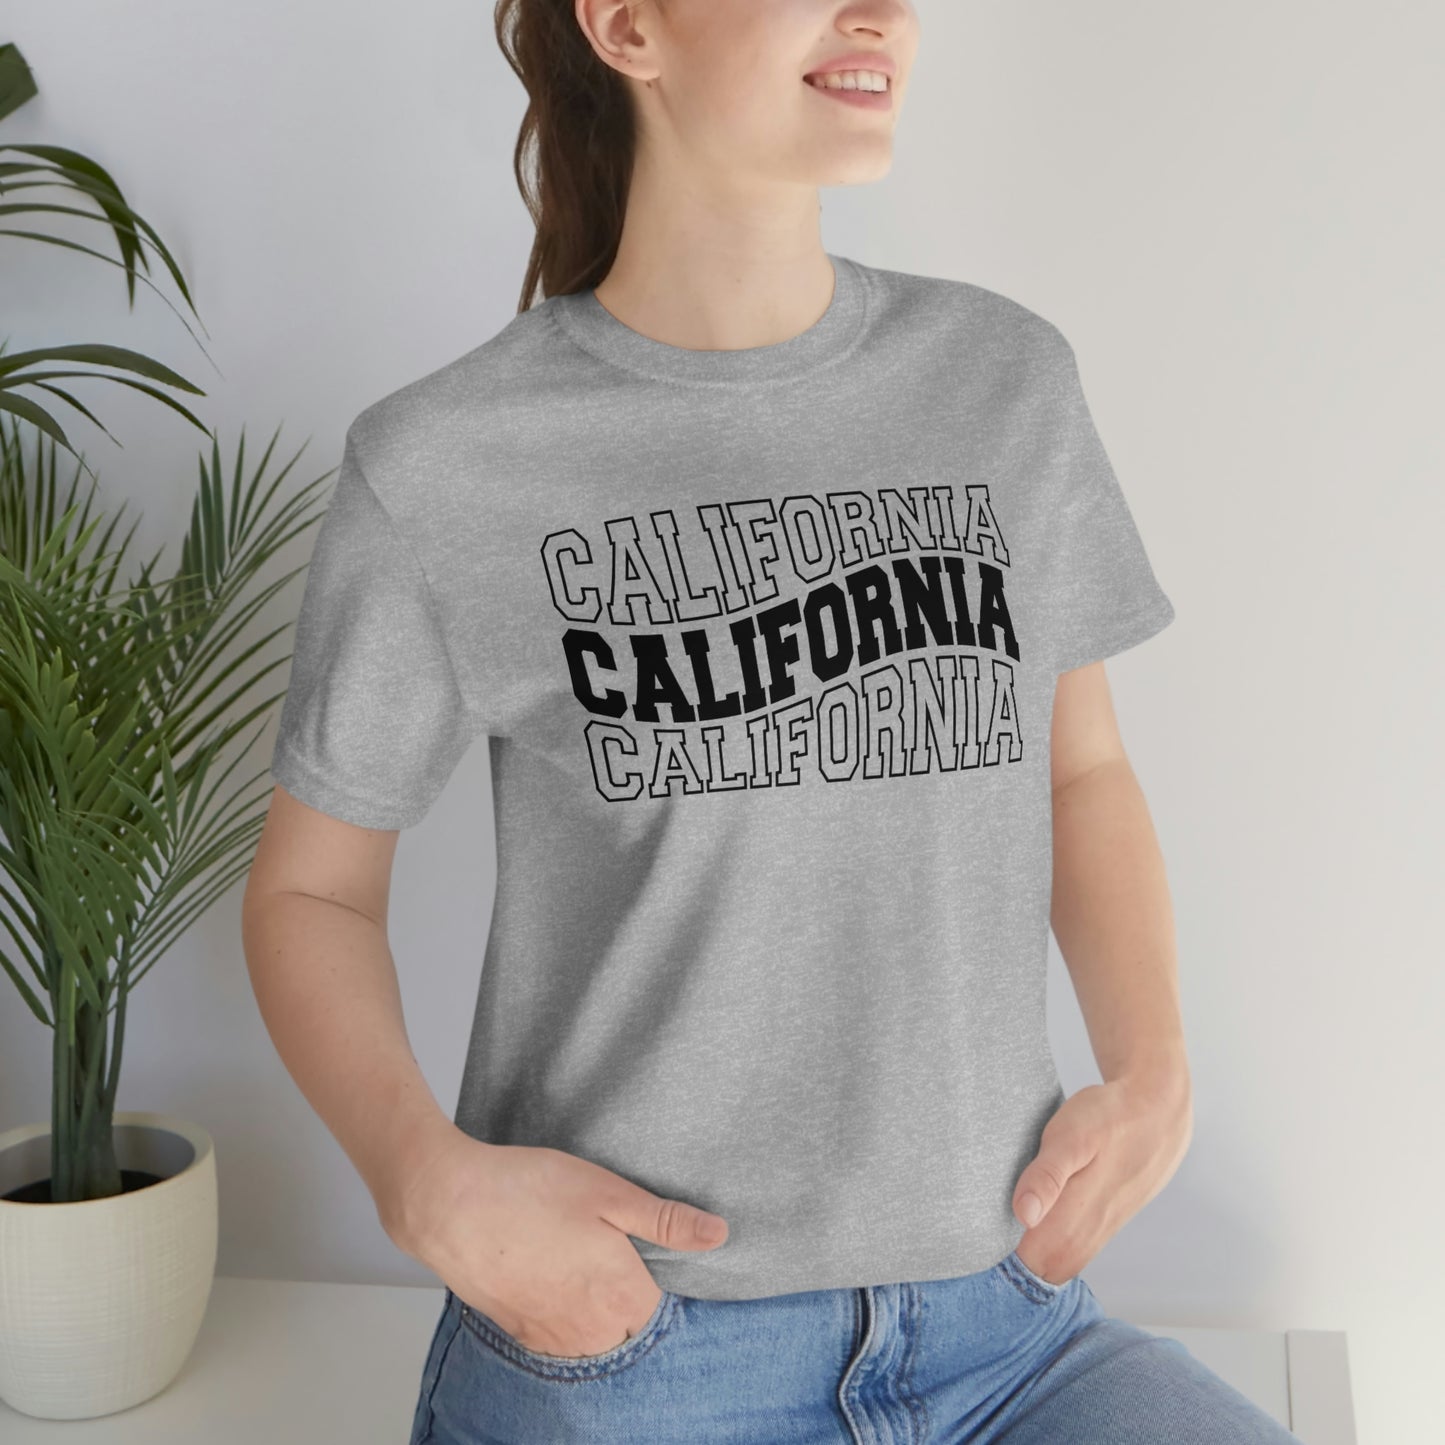 California Wavy Varsity Letters Unisex Jersey Short Sleeve Tee Tshirt T-shirt